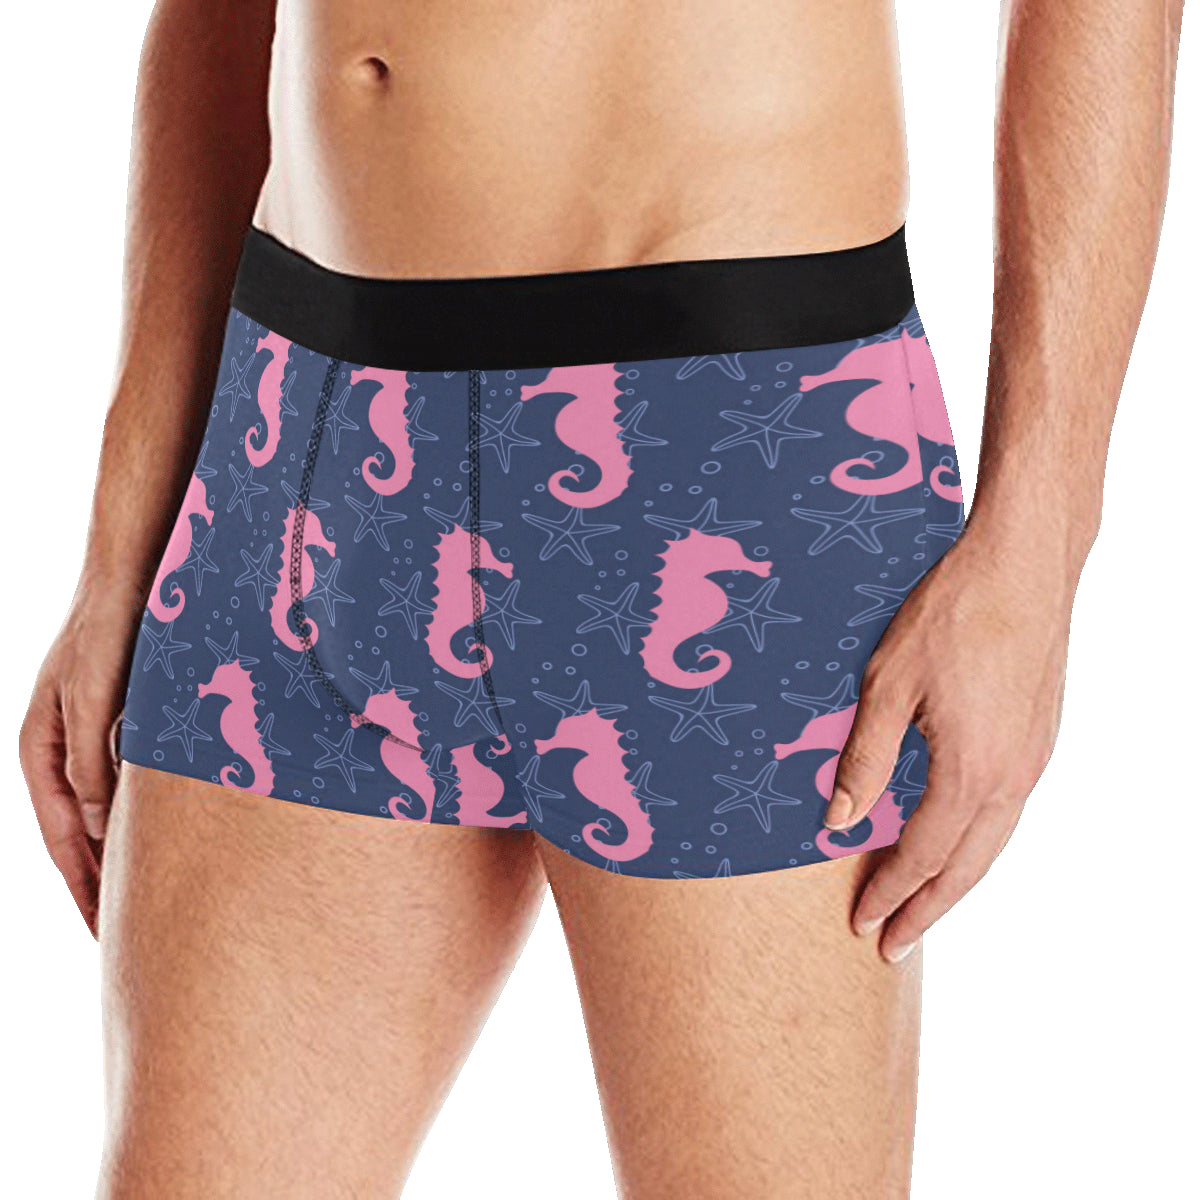 SeaHorse Pink Pattern Print Design 02 Men's Boxer Briefs